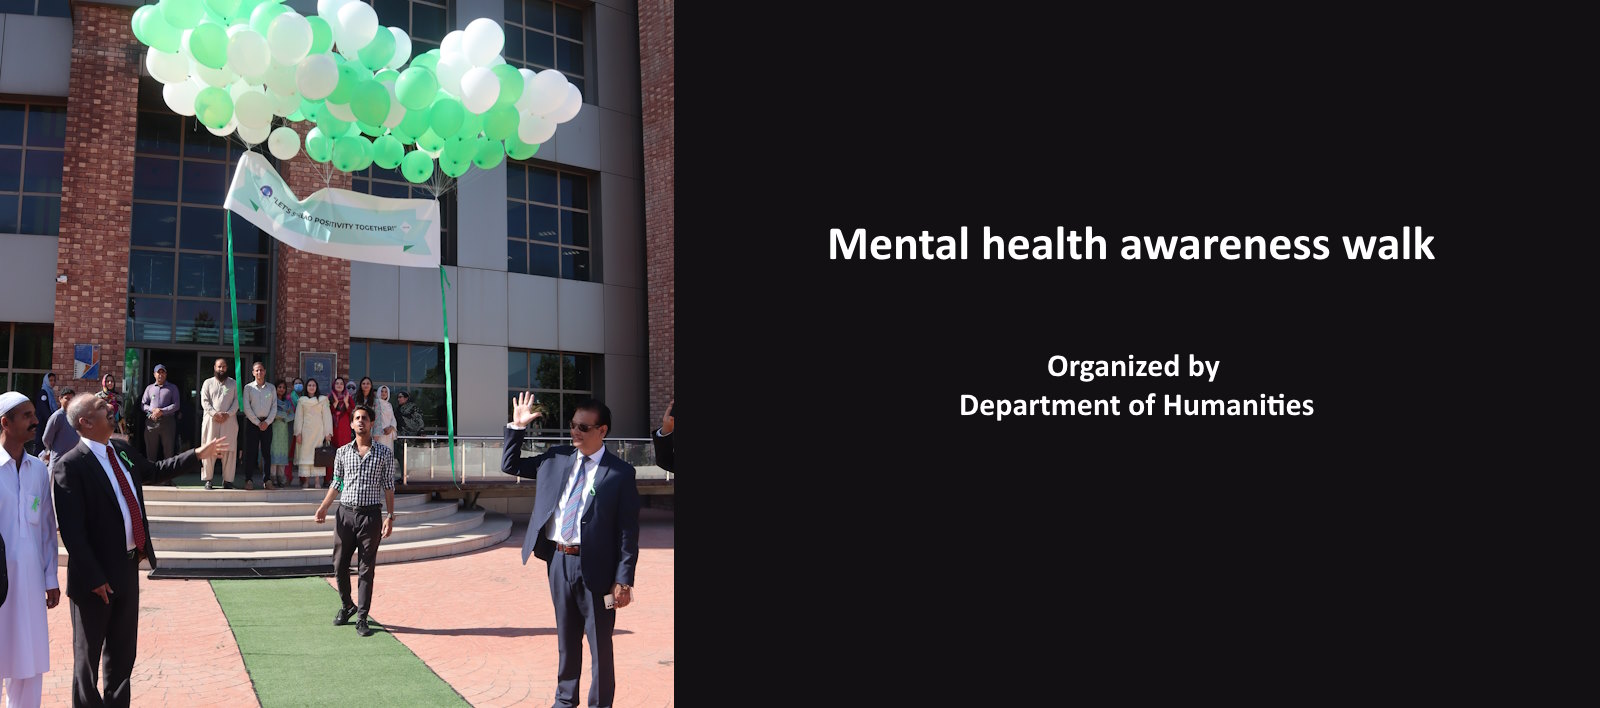 Mental health awareness walk, organized by Department of Humanities